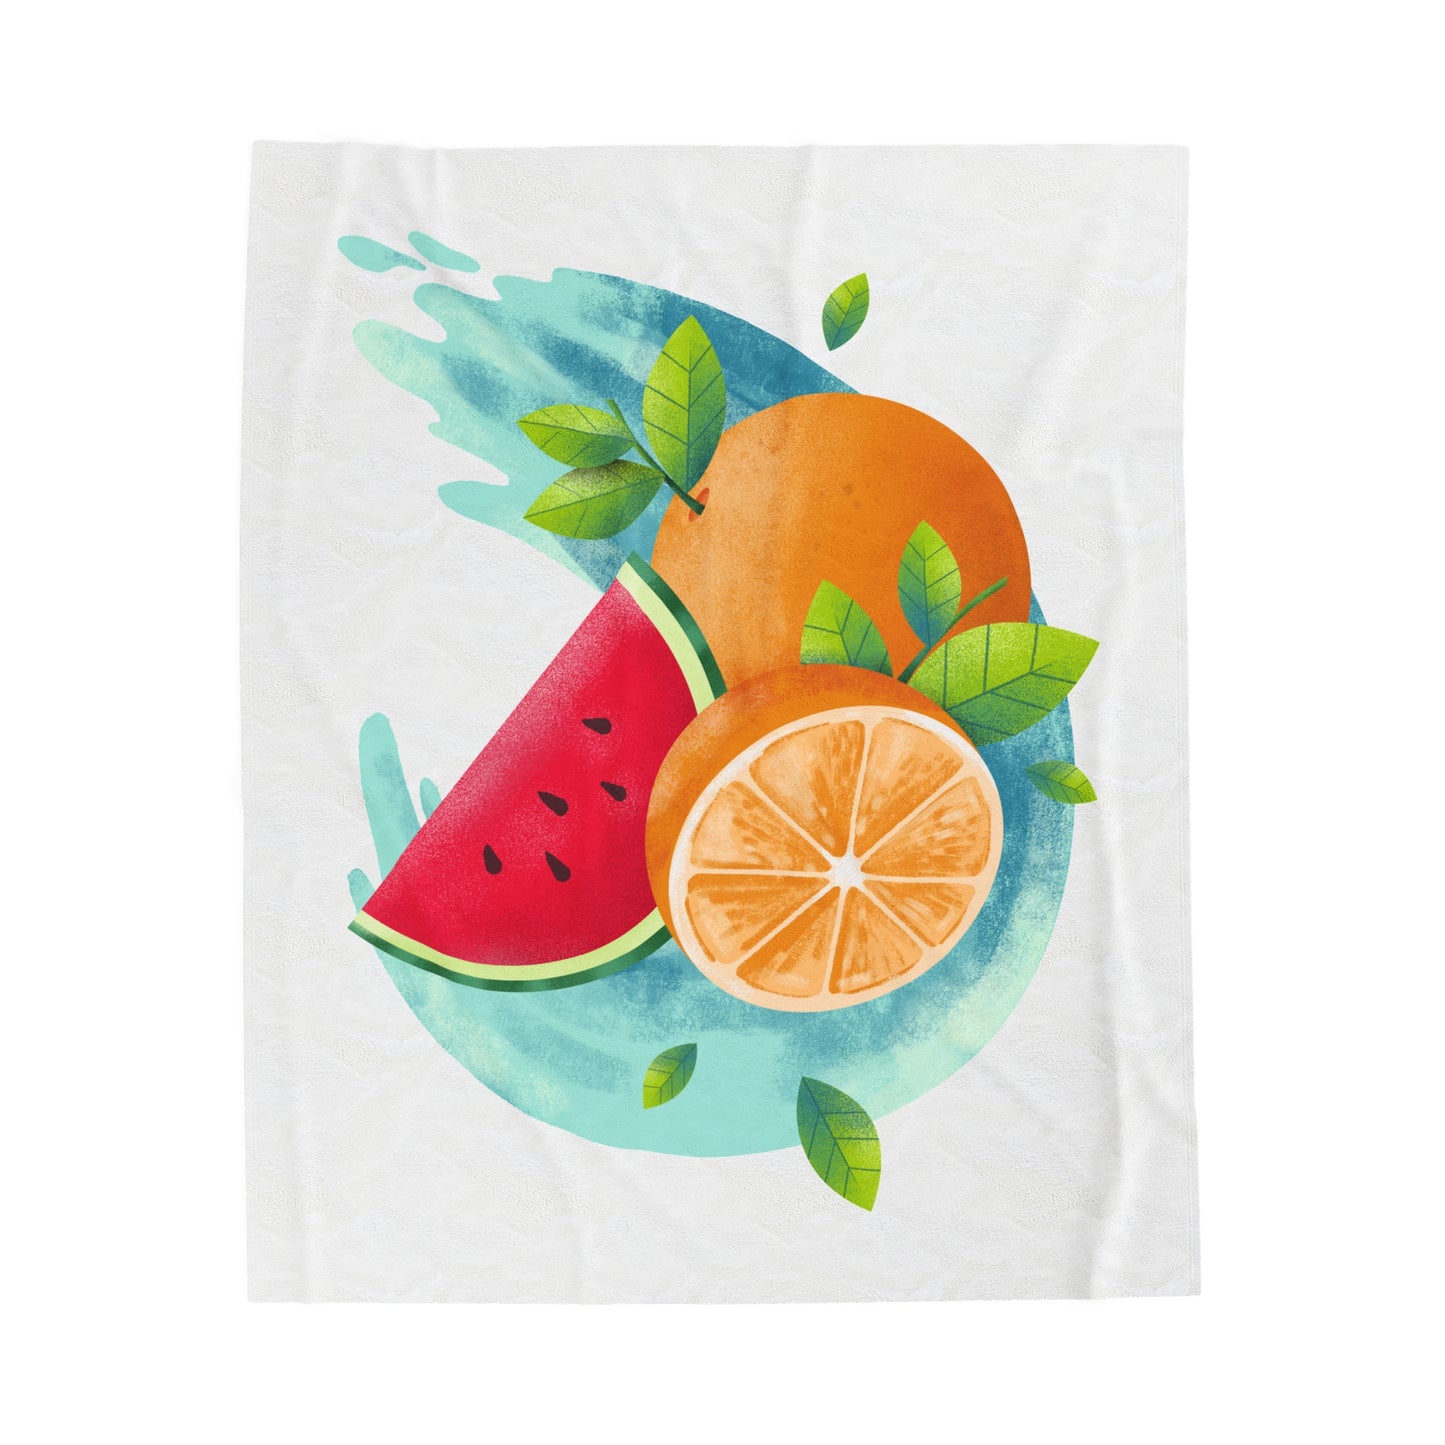 PoM's Fruity Life Bundle (#MFL-B07004A): Bed sheet + pillow (case), shorts, (framed) poster, Backpack, Tumbler and Mug